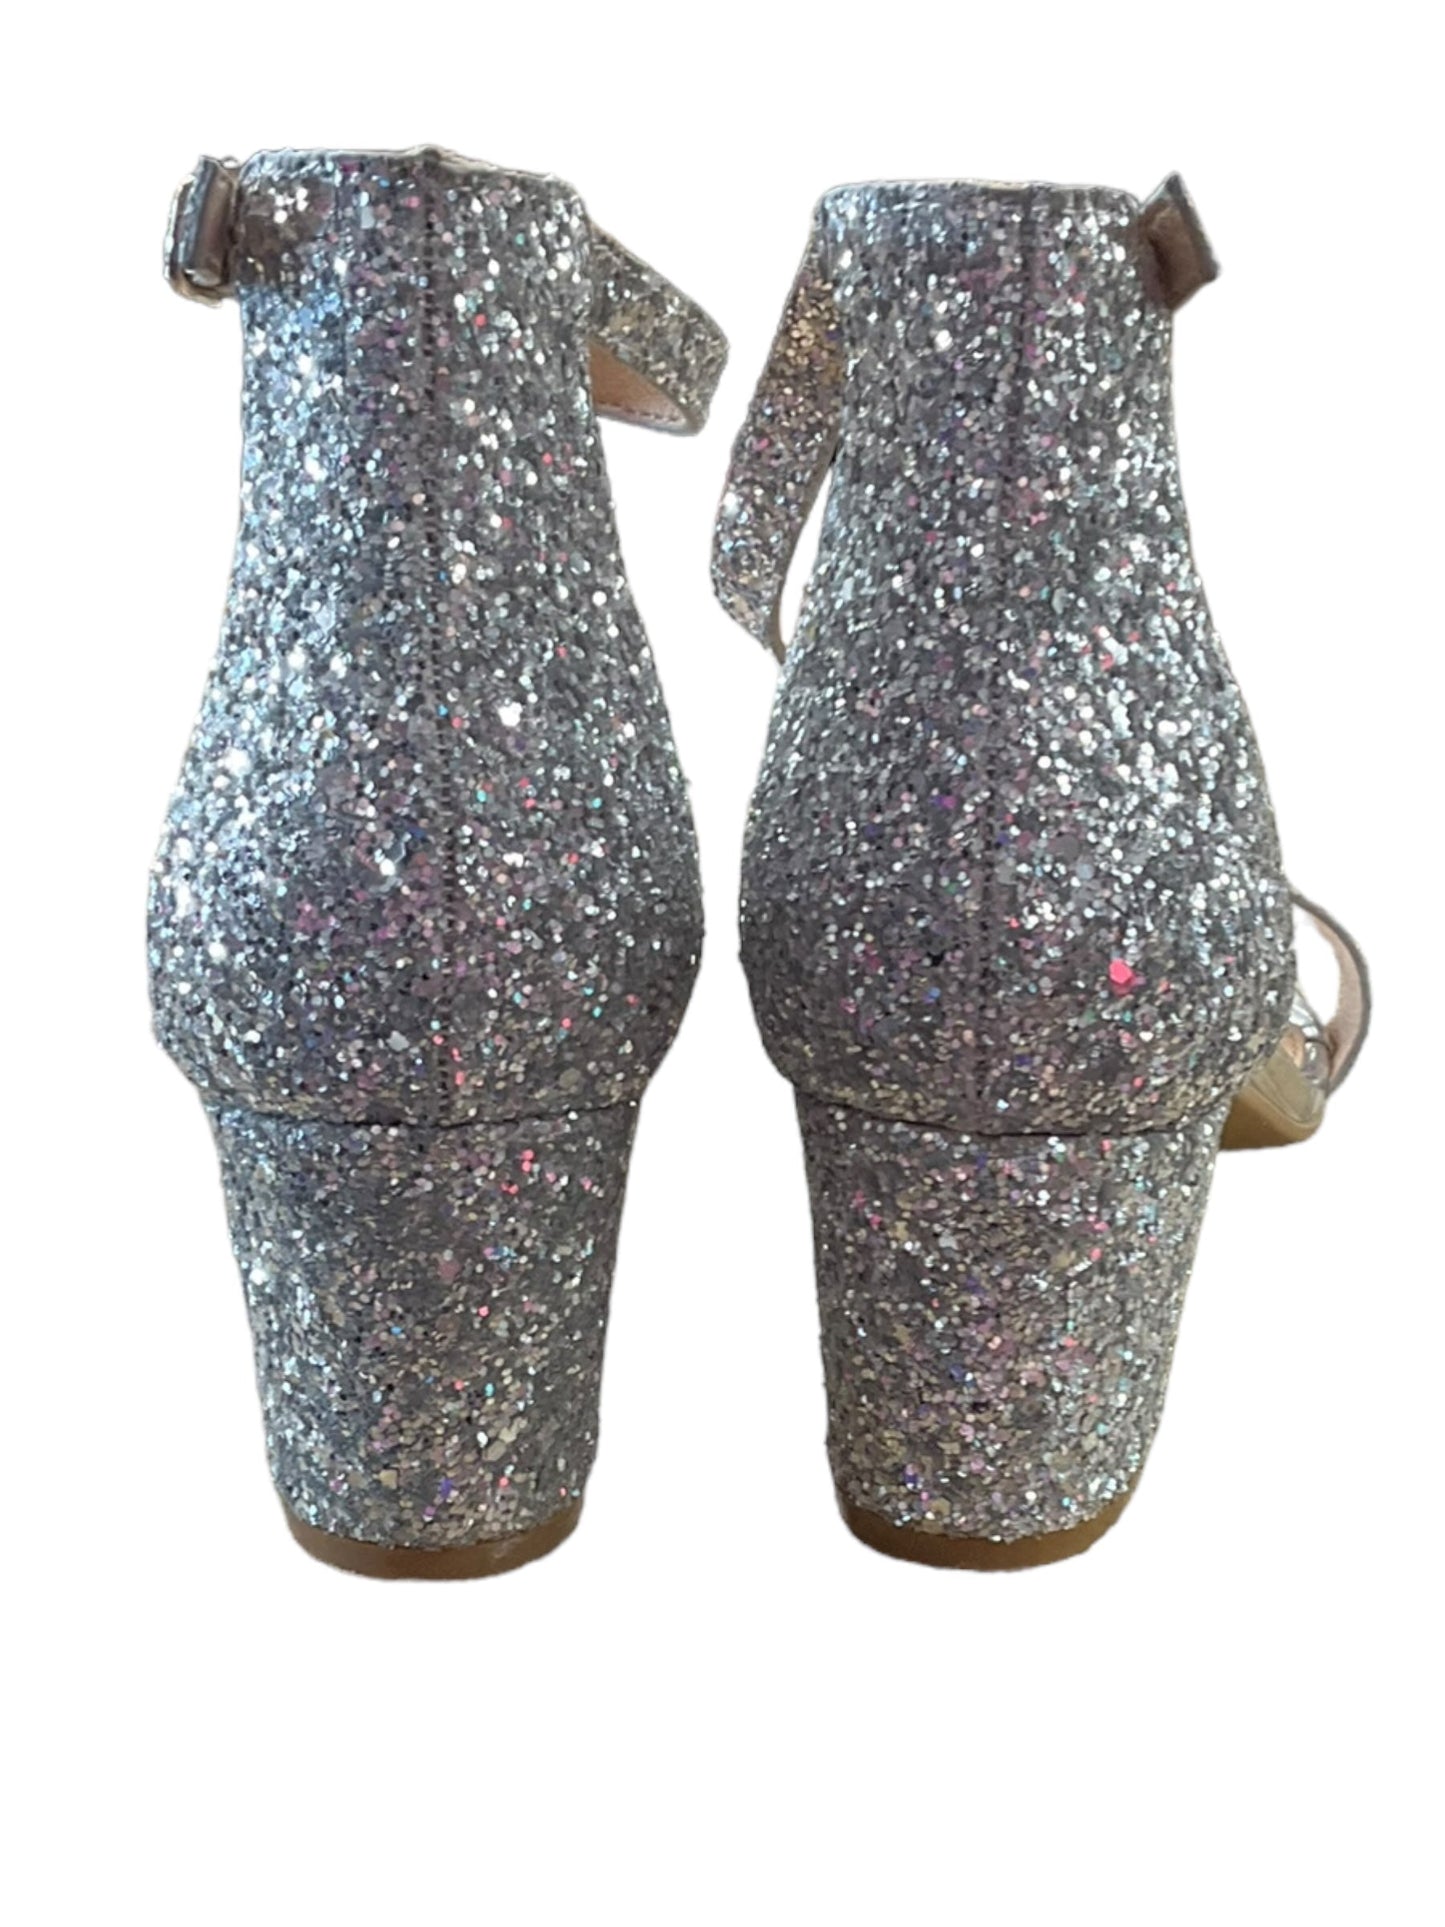 Silver Sandals Heels Platform J Brand, Size 10